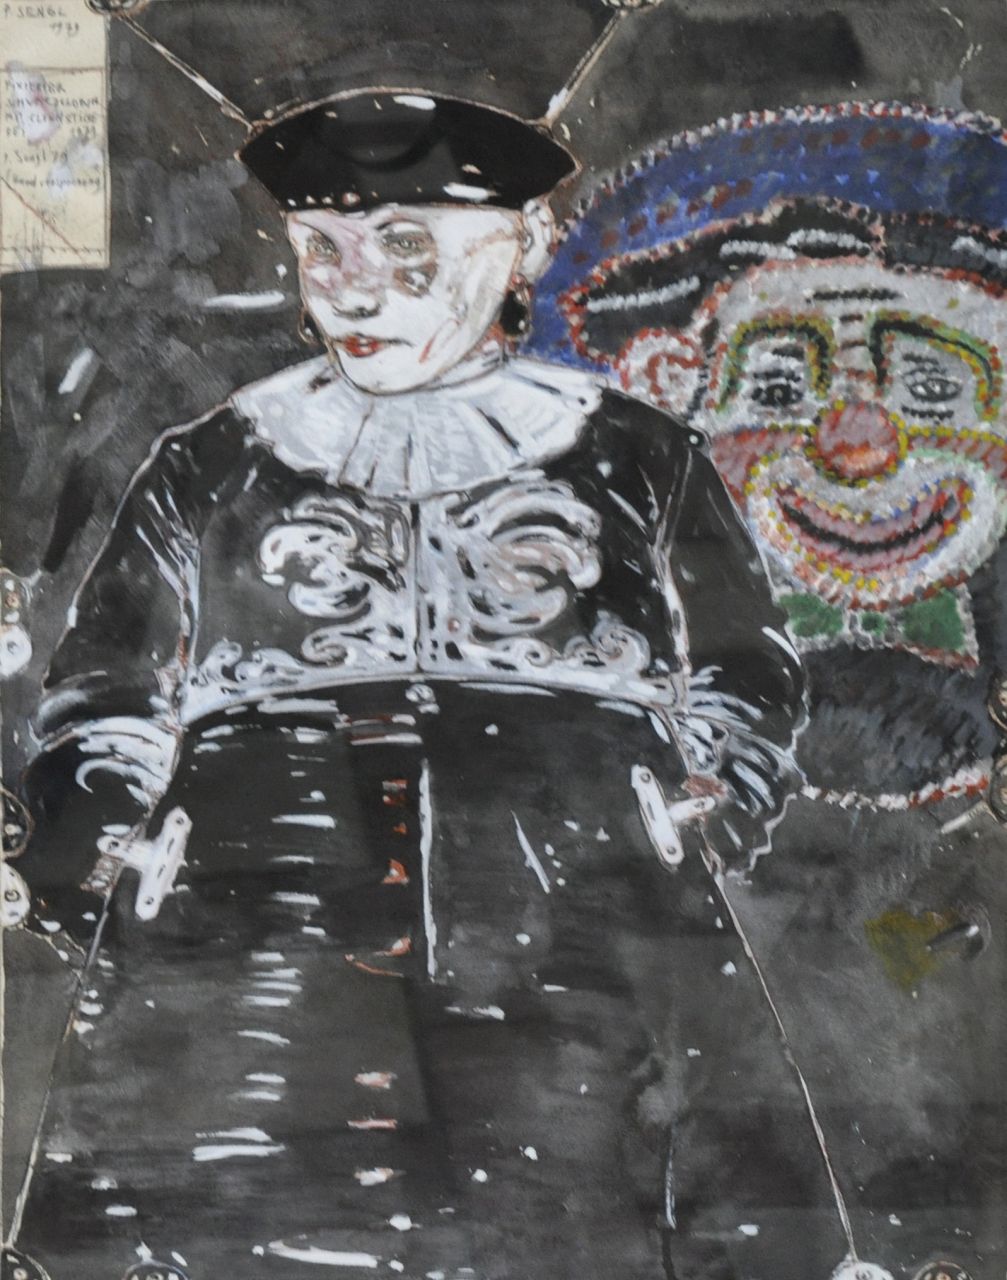 Peter Sengl | Fixierter Schwarzclown mit Clownstickerei, gouache on paper, 60.5 x 46.7 cm, signed u.l. and dated 1979